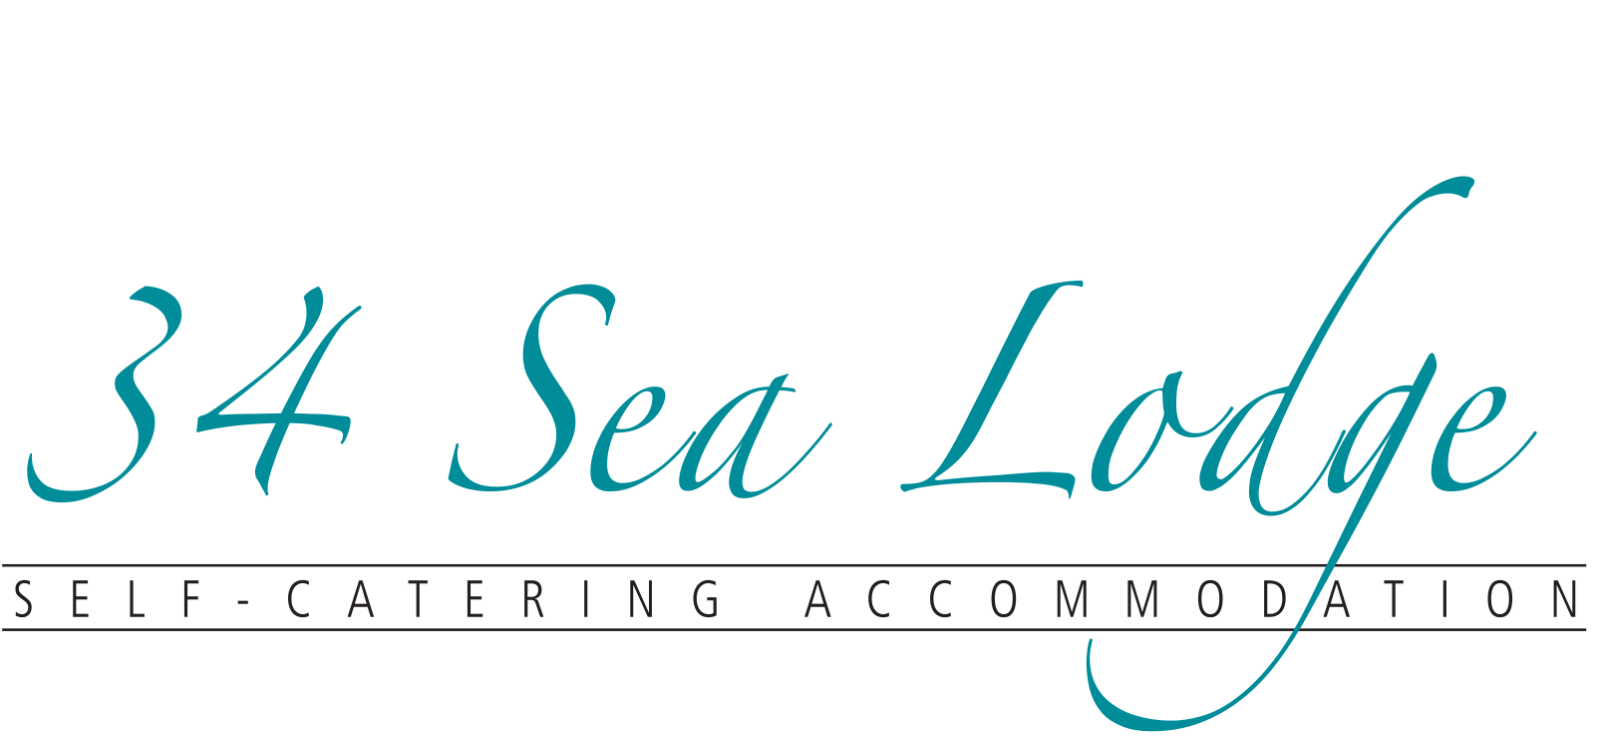 34 Sea Lodge Luxury Apartment Accommodation in Umhlanga